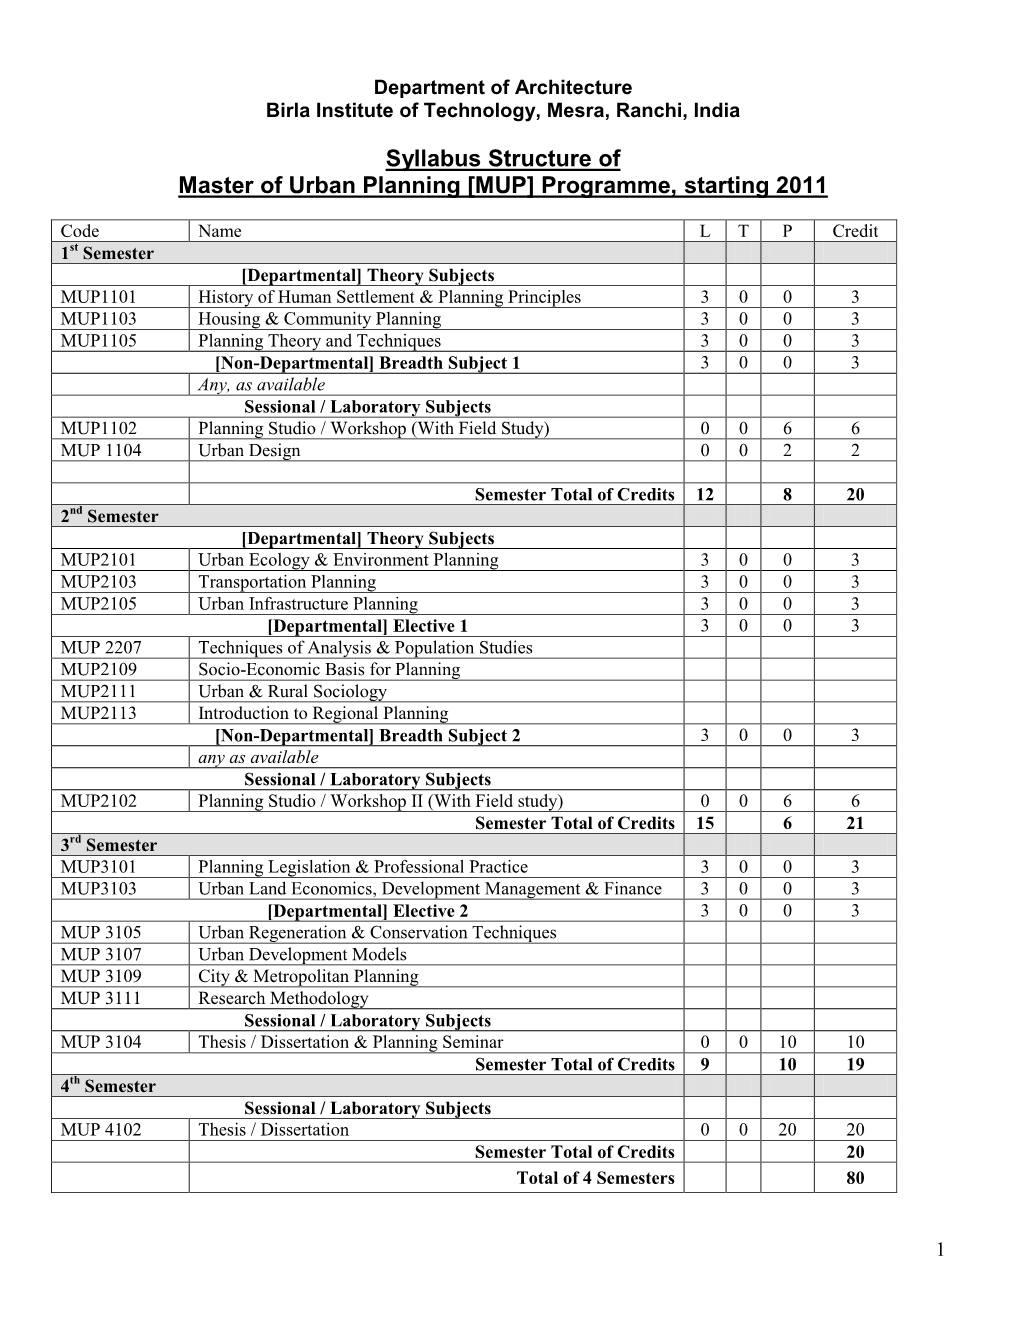 Syllabus Structure of Master of Urban Planning [MUP] Programme, Starting 2011